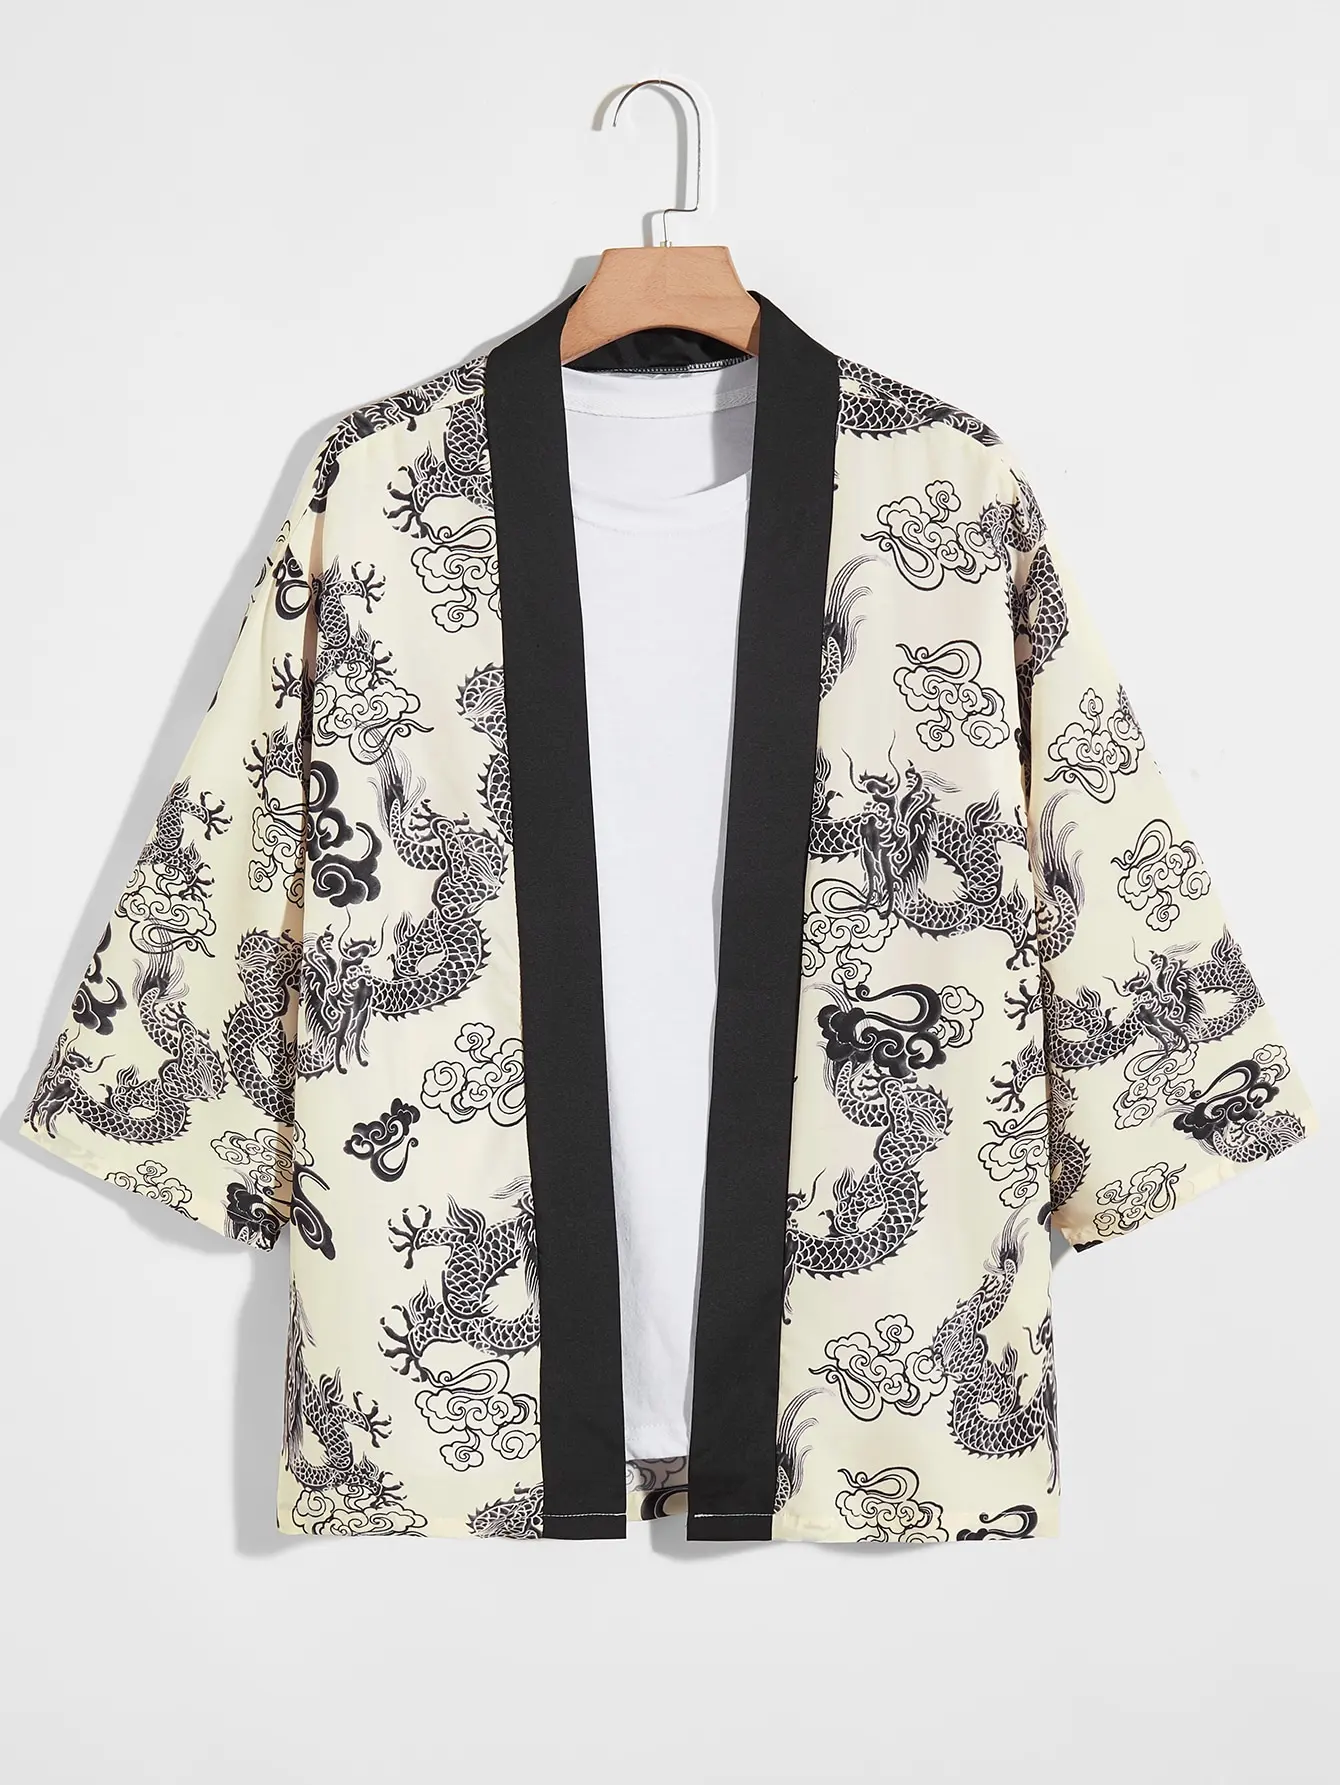 Medium and long sleeves digital printing auspicious clouds dragon kimono casual men's shirt 2022 spring and autumn new